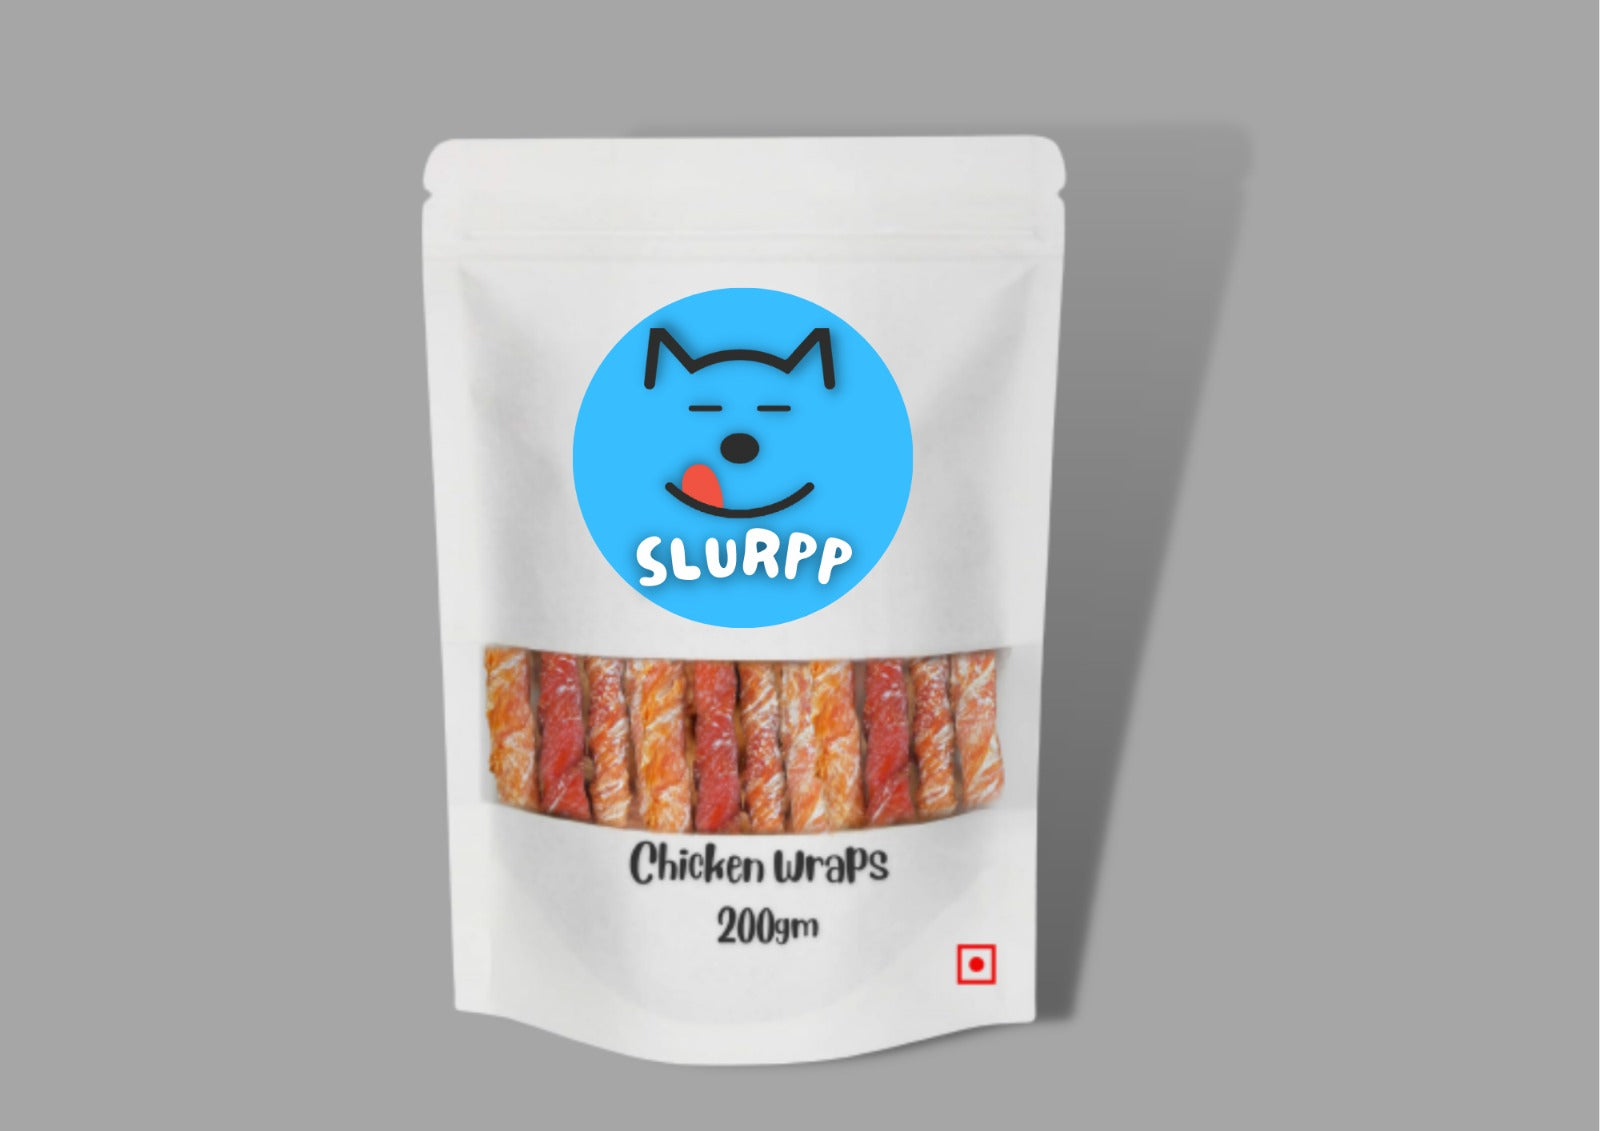 Slurpp Chicken Wraps for Dogs